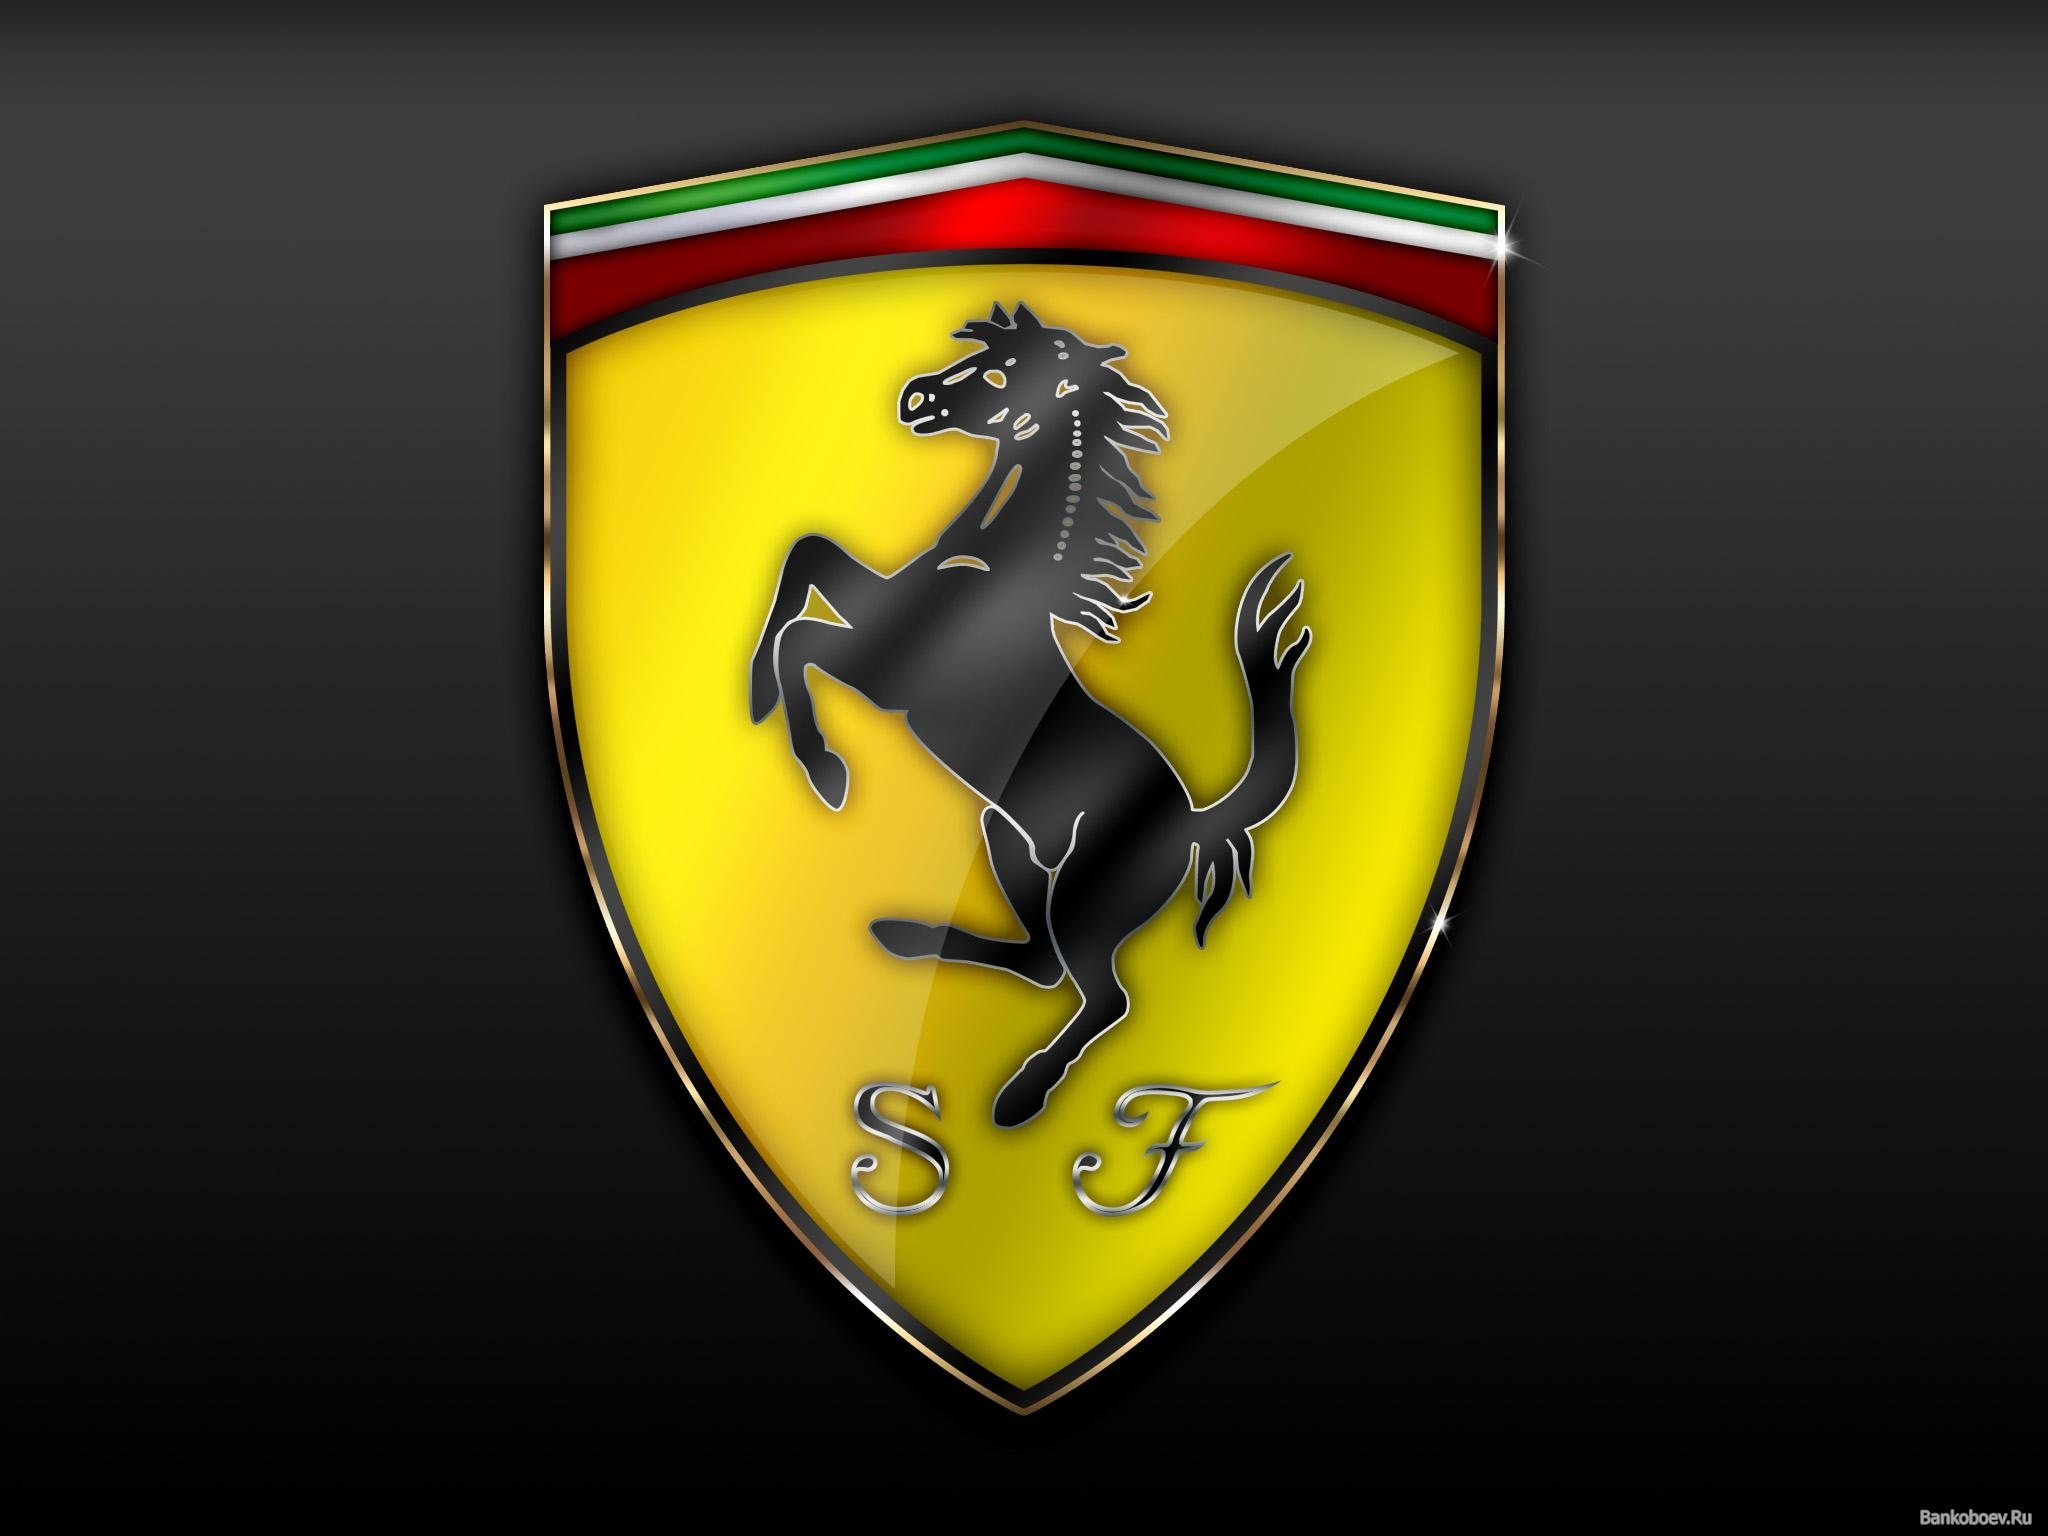 ferrari, Logo, Cars Wallpapers HD / Desktop and Mobile Backgrounds